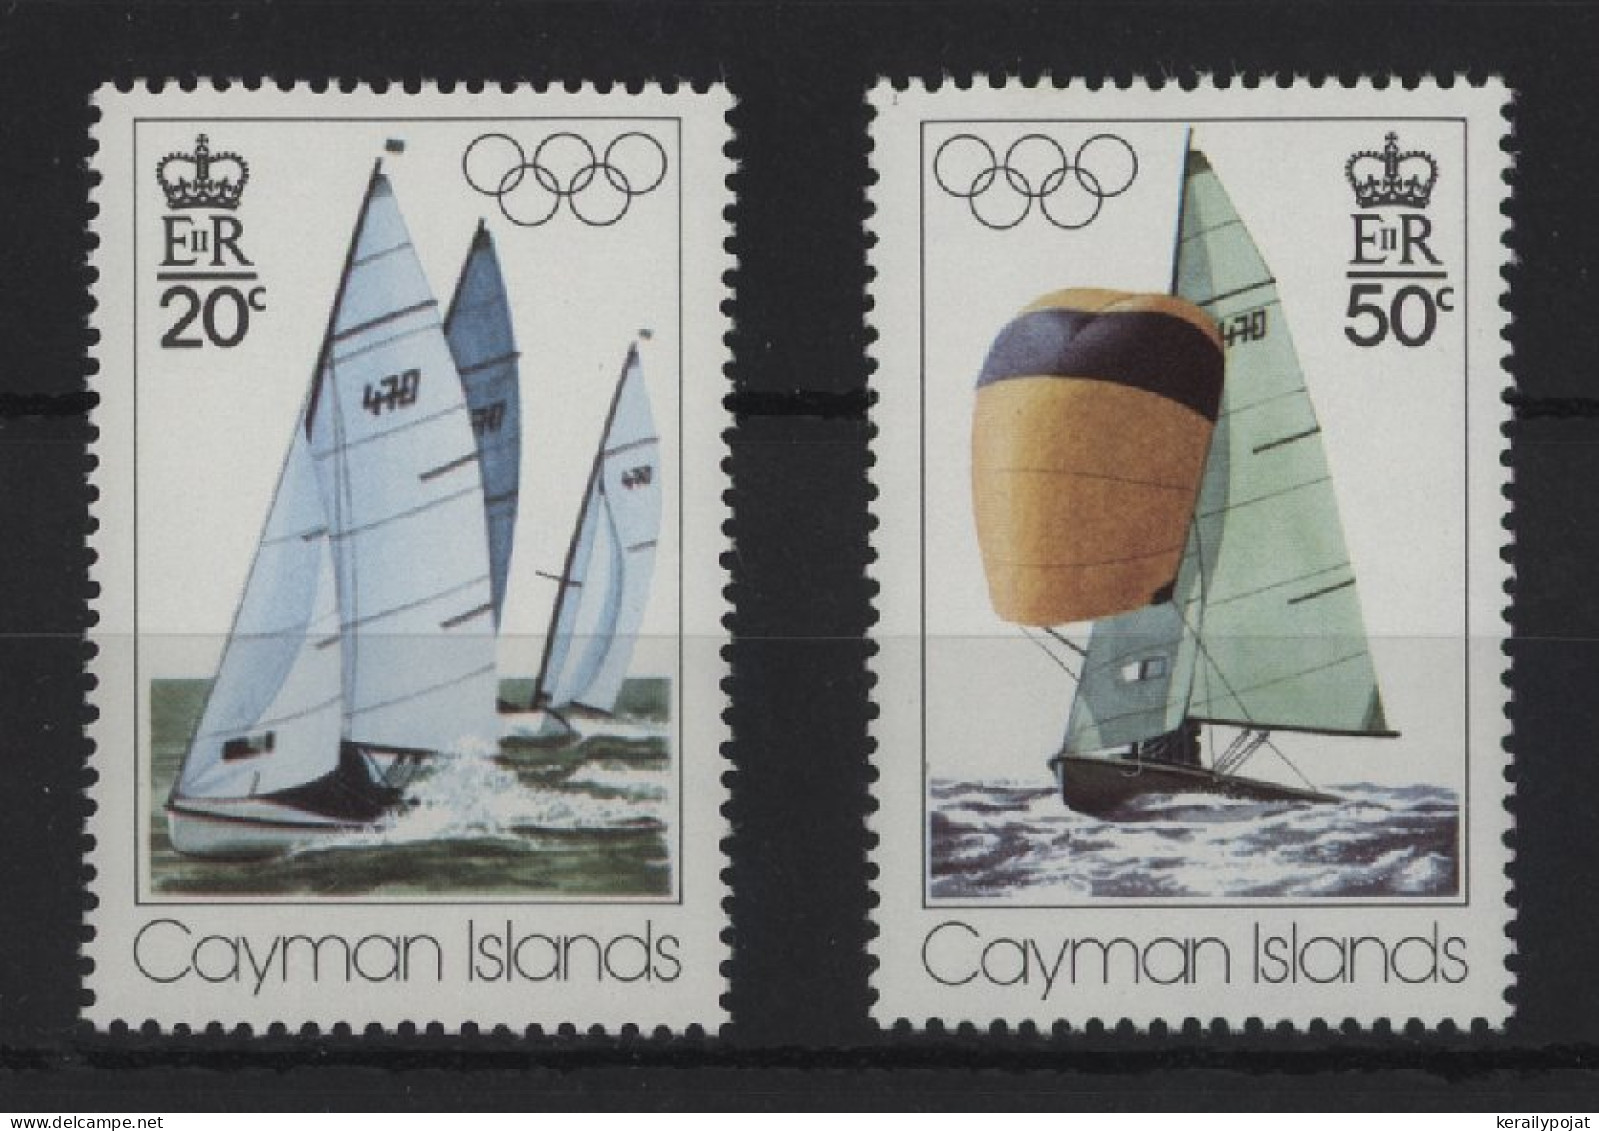 Cayman Islands - 1976 Summer Olympics Montreal MNH__(TH-24212) - Kaimaninseln